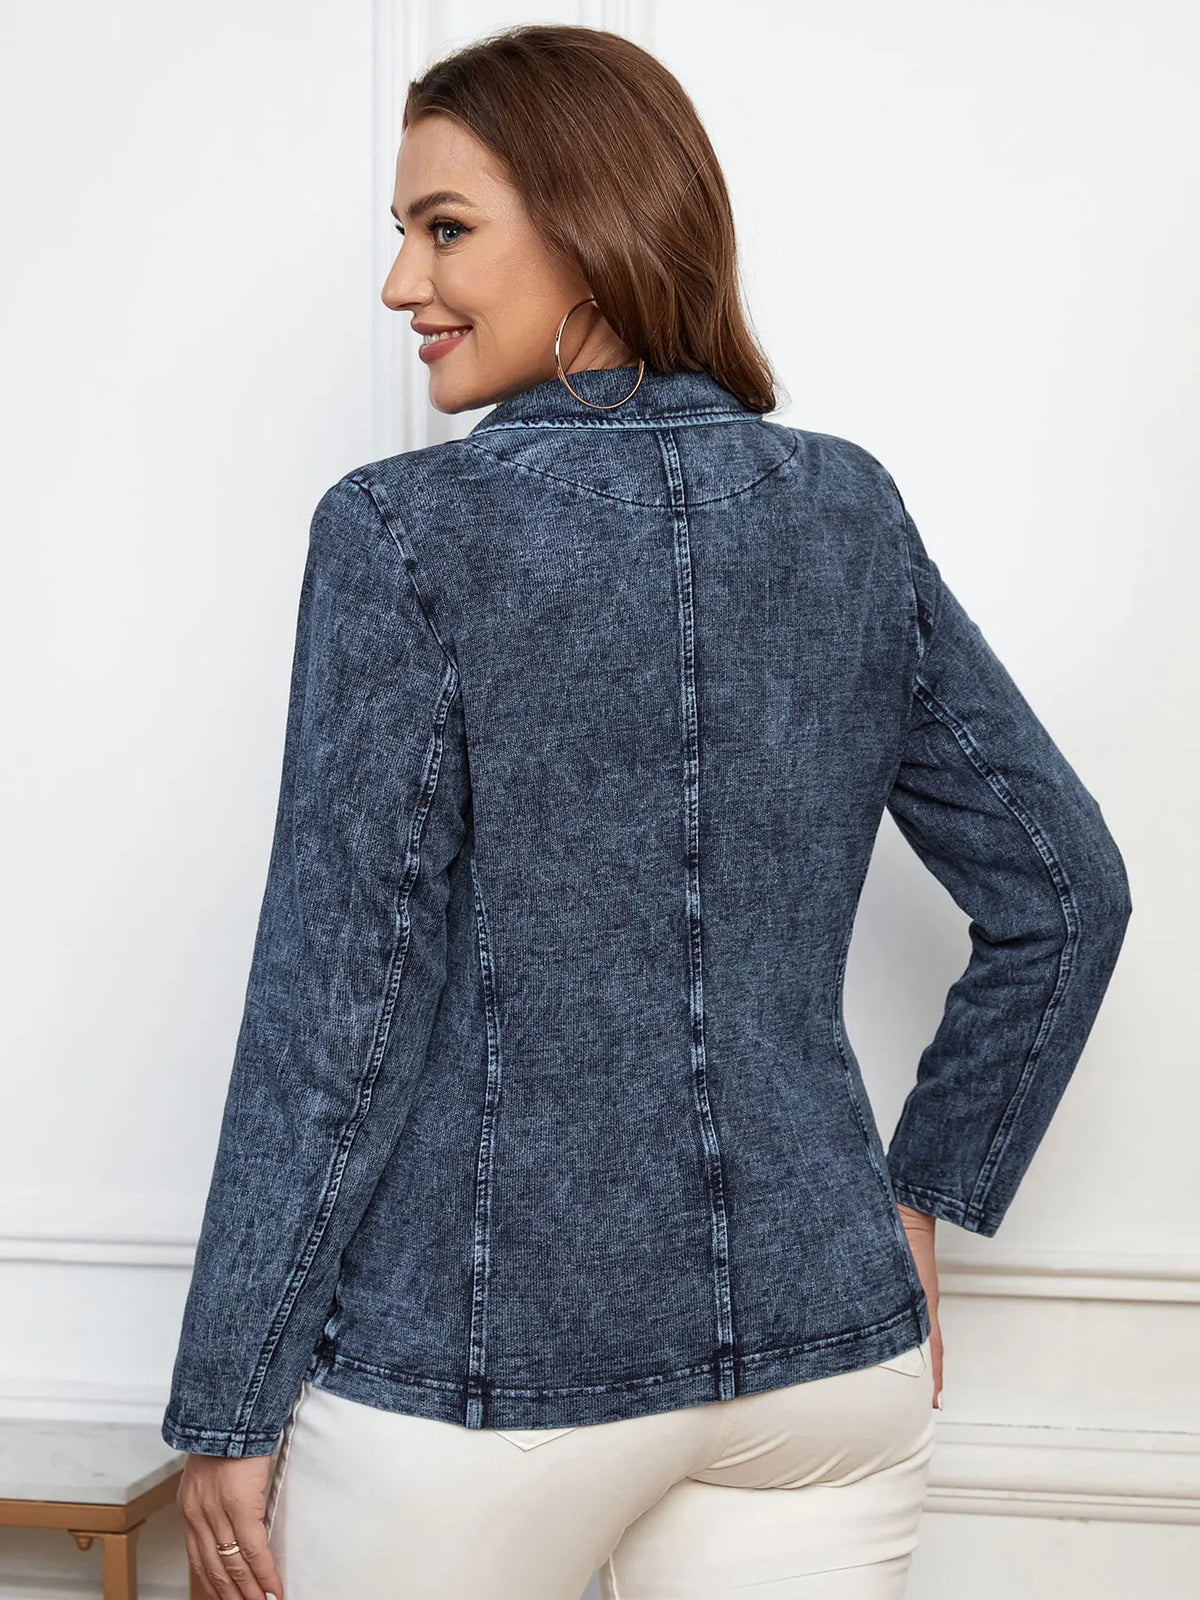 LIH HUA Women's Plus Size Chic Elegant Knitted Cotton Suit Jacket